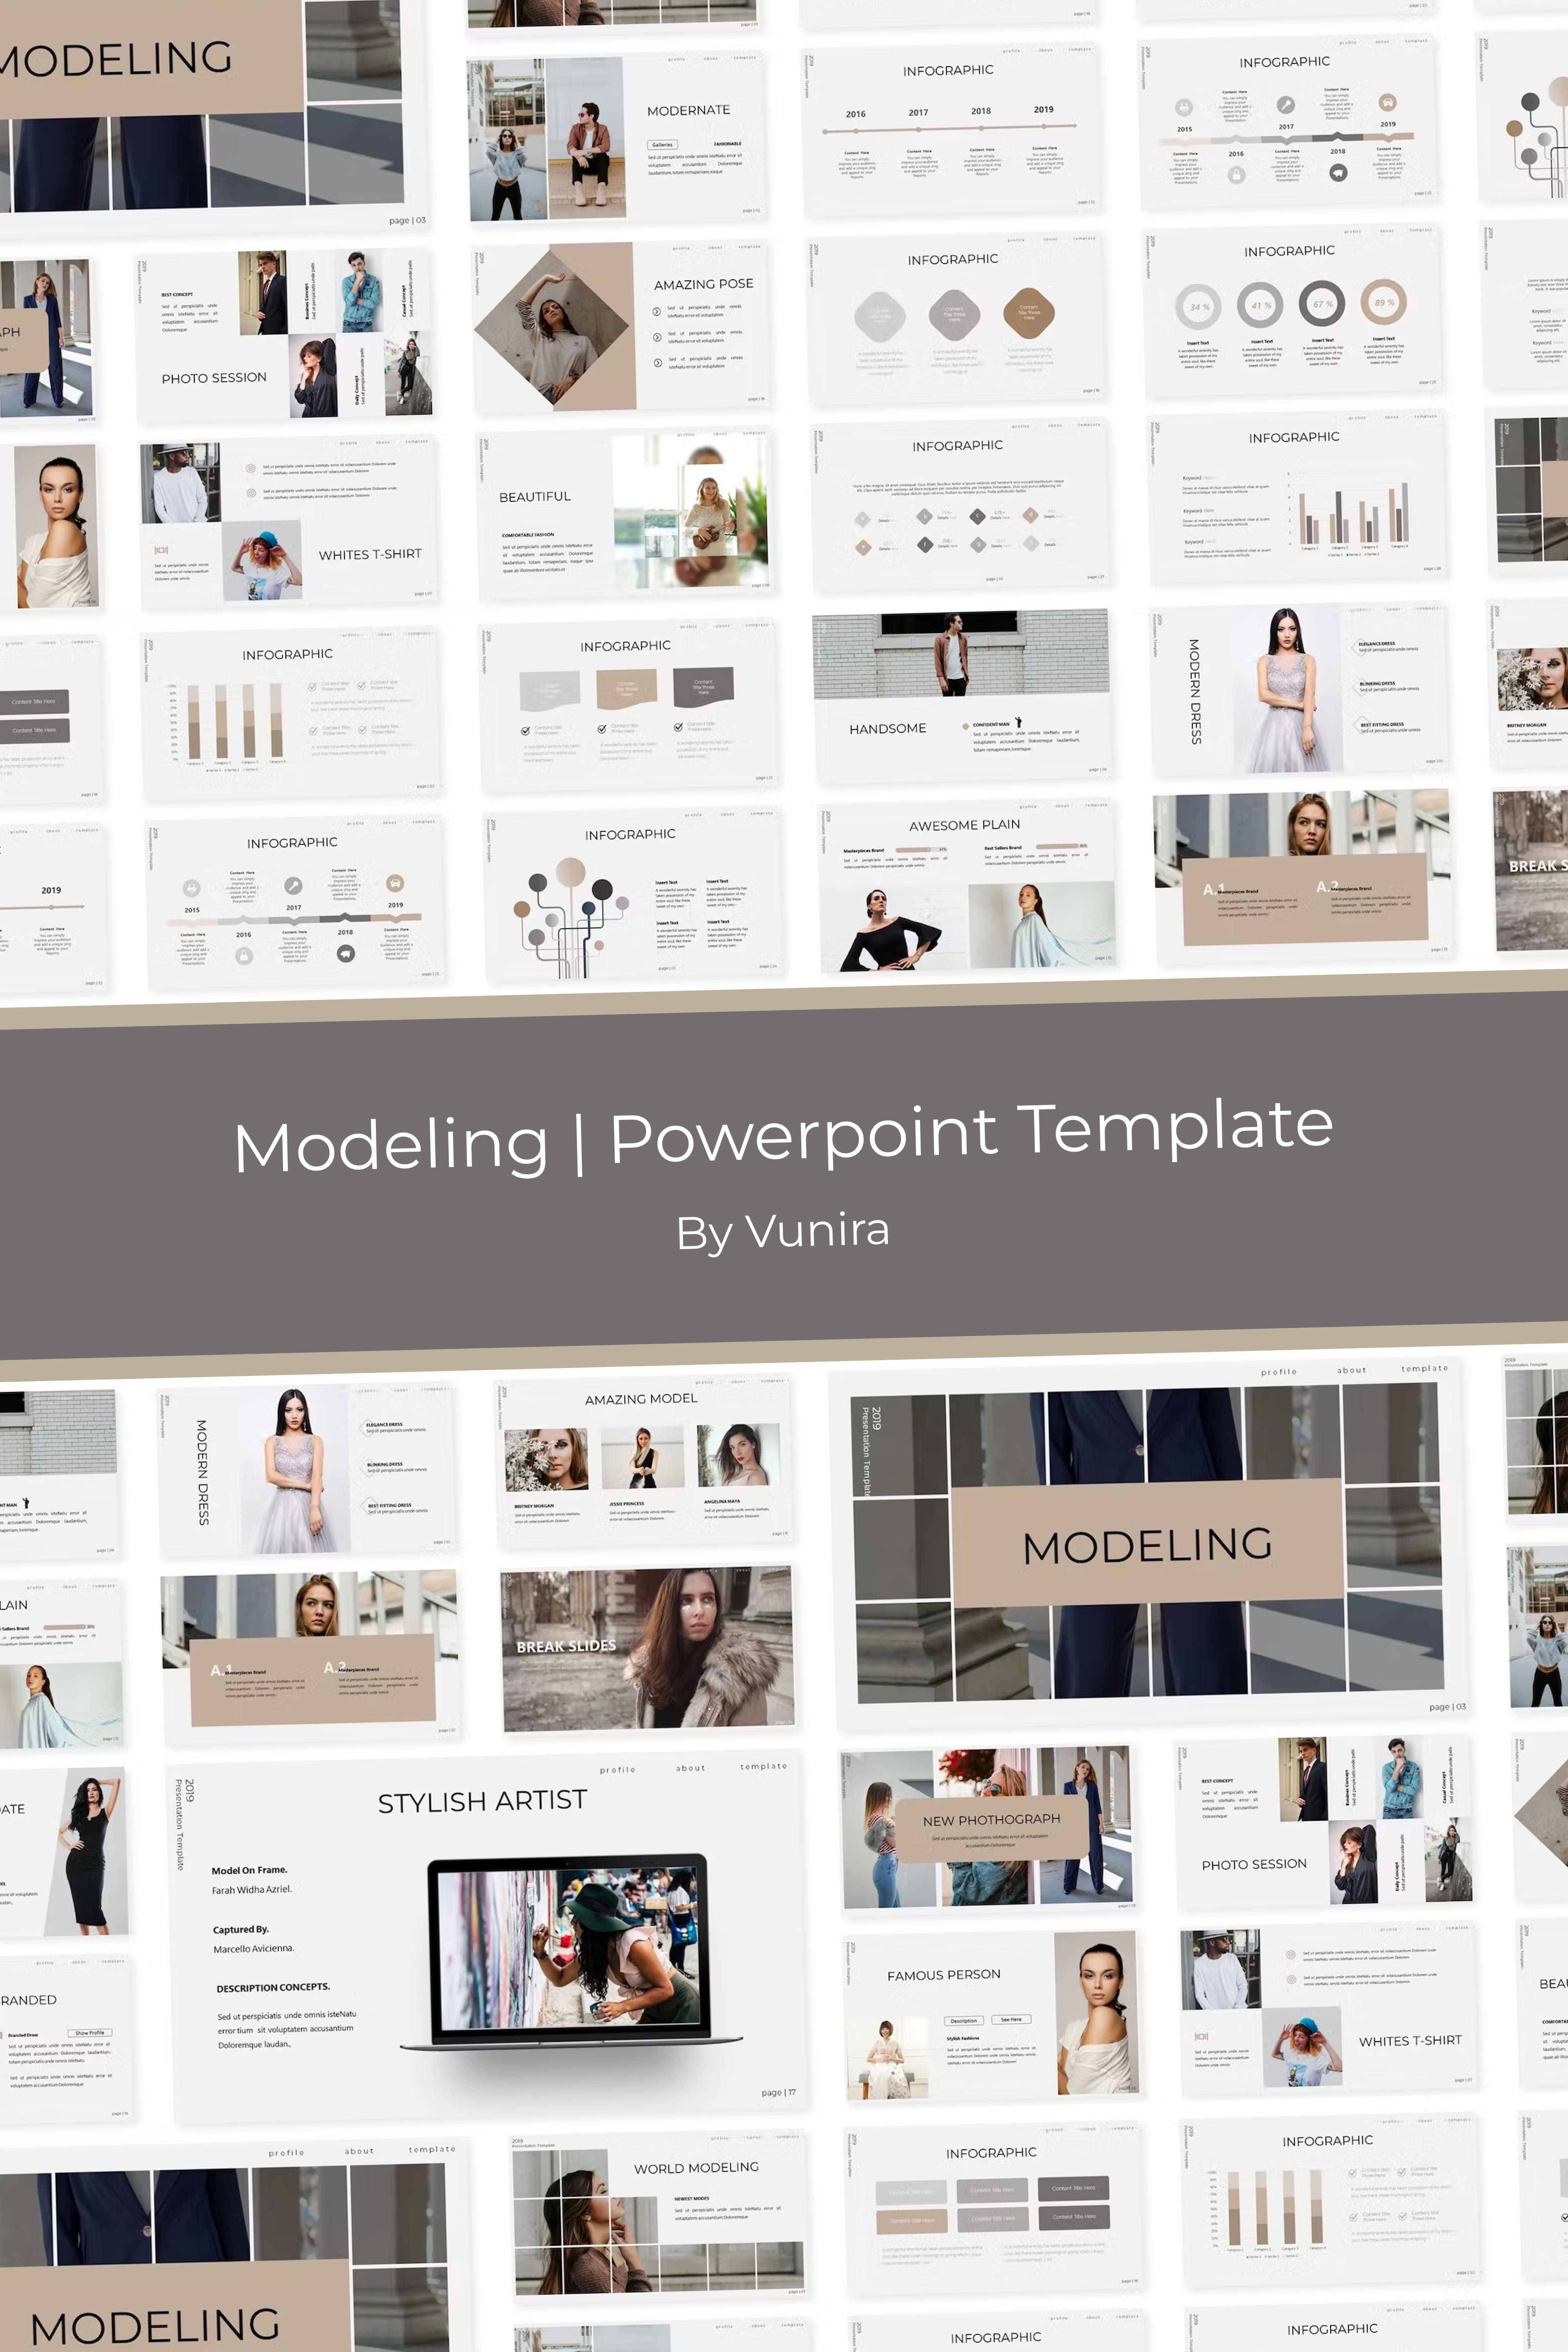 Modeling | Powerpoint Template - Pinterest.